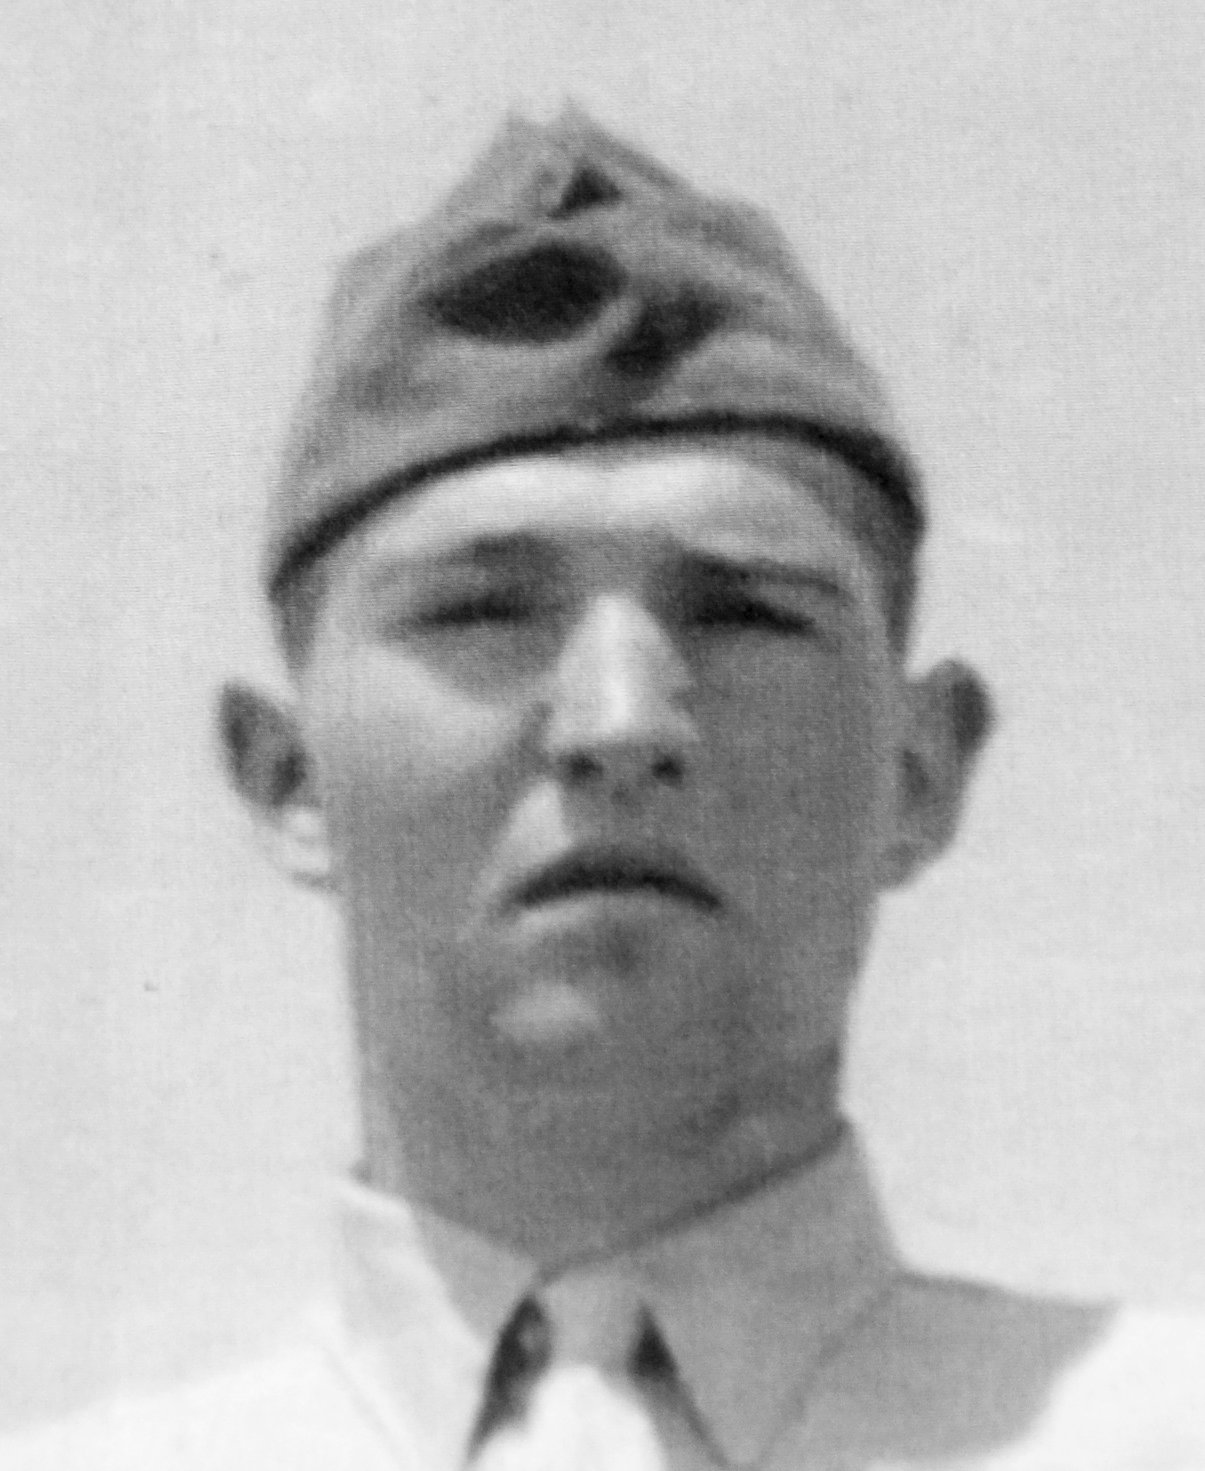 A photo of George Morris in uniform circa 1944.